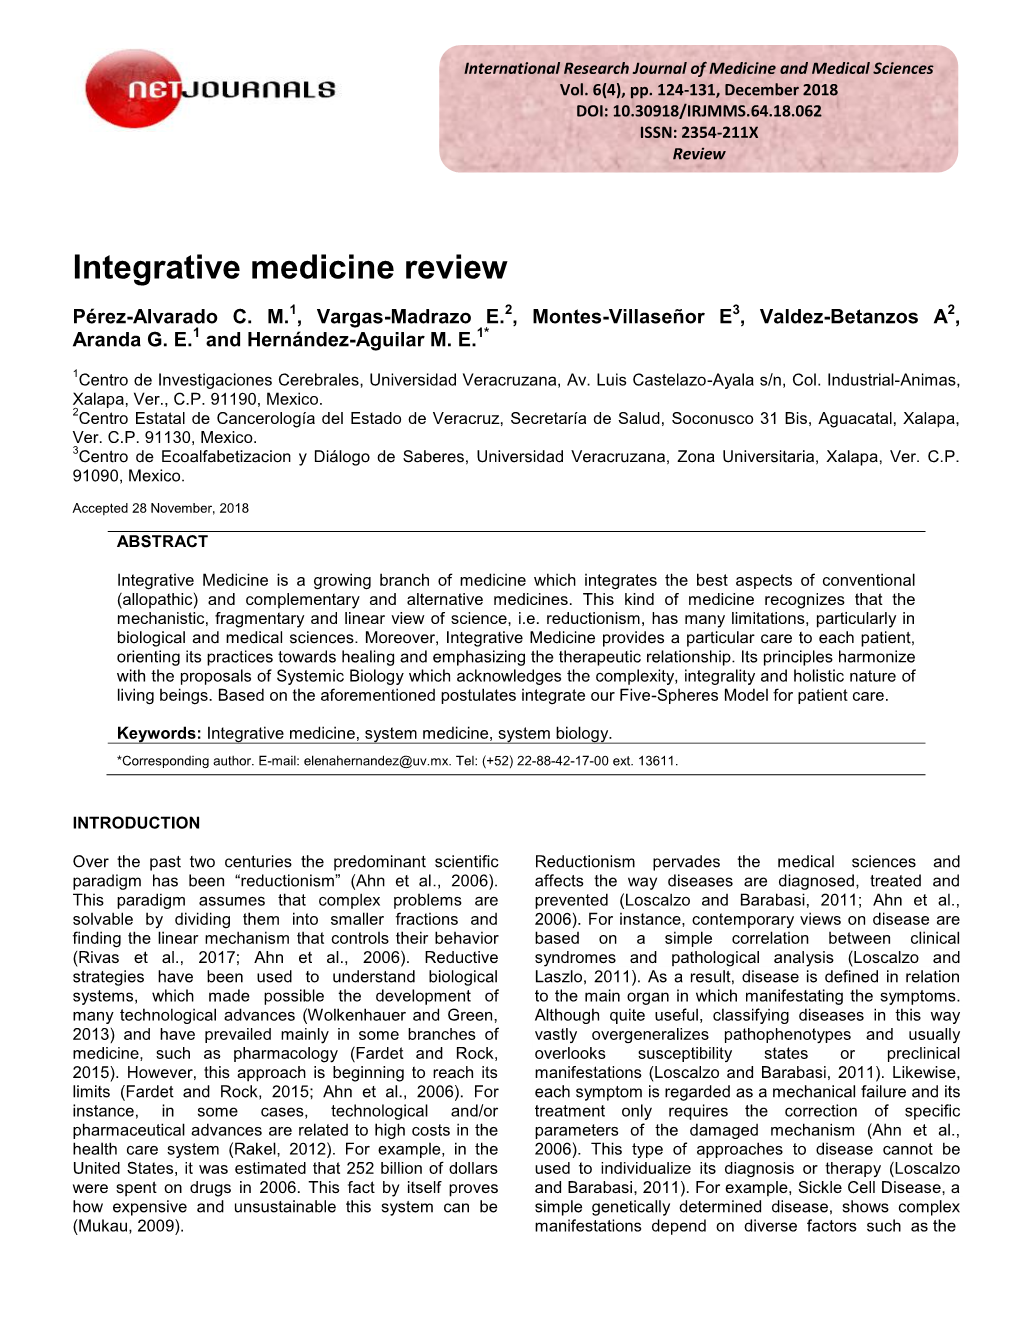 Integrative Medicine Review